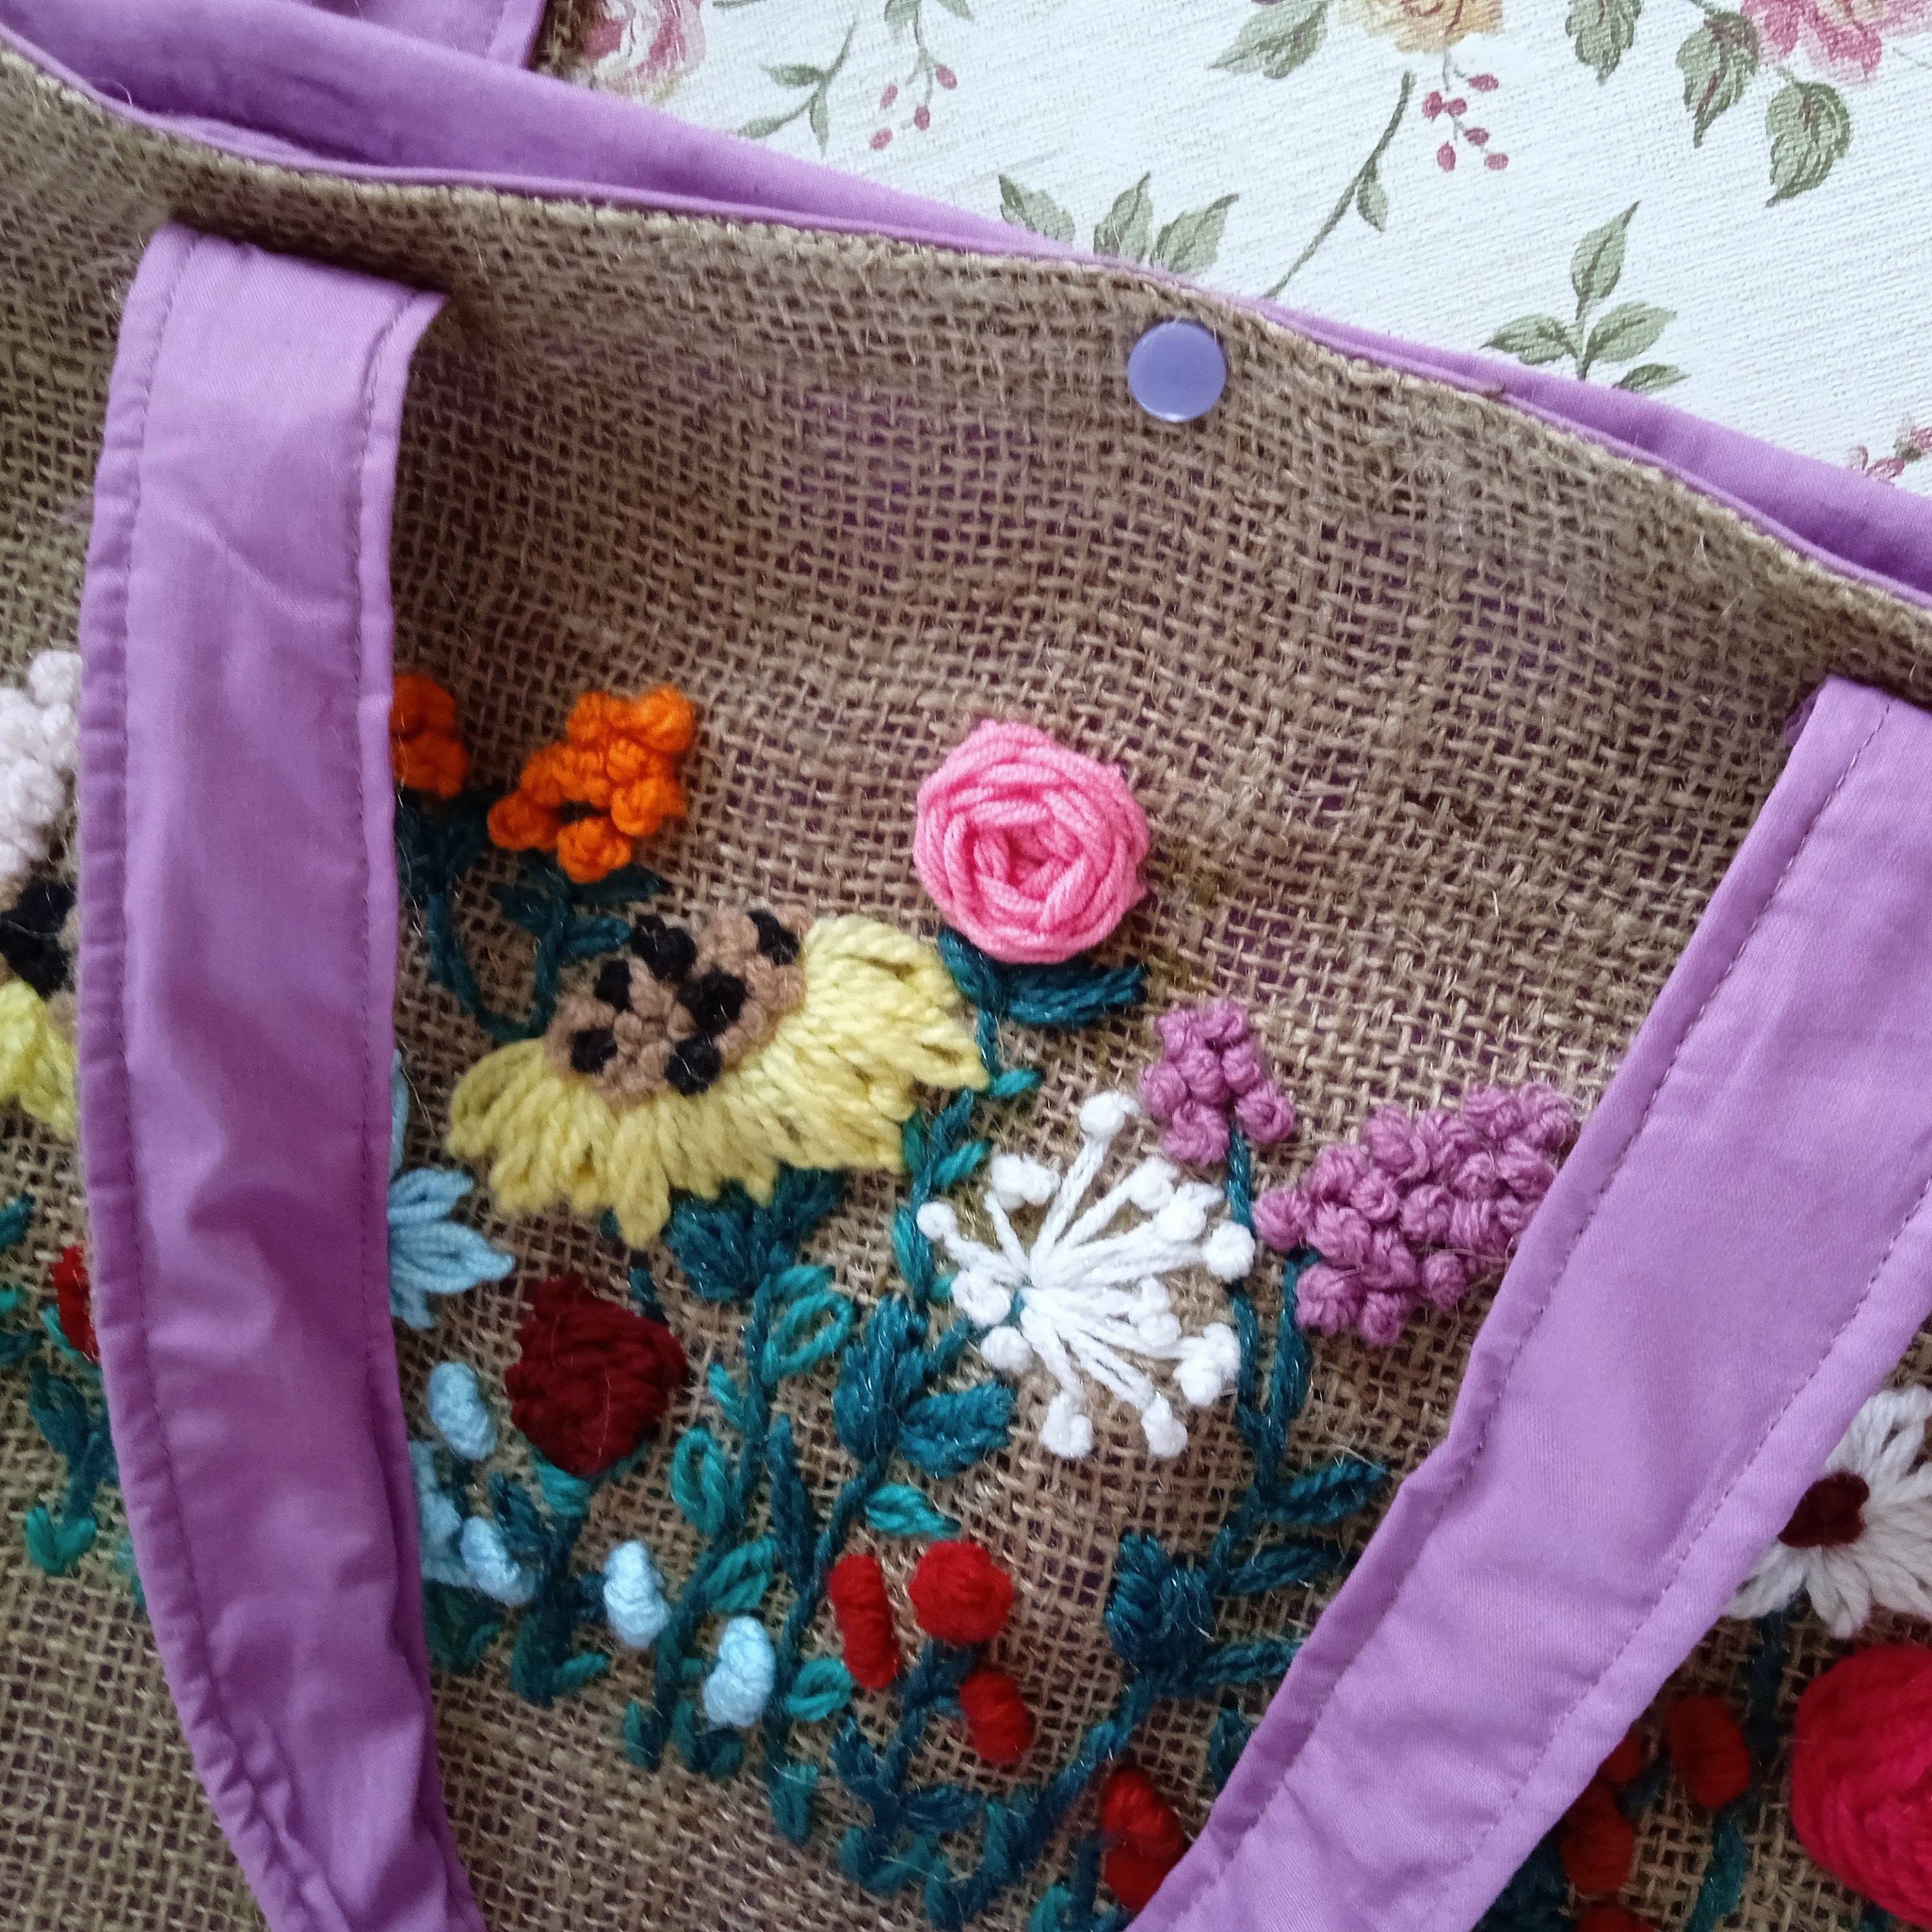 Hand Embroidered Burlap Bag, Cute Market Bag, Eco Friendly Beach Bag